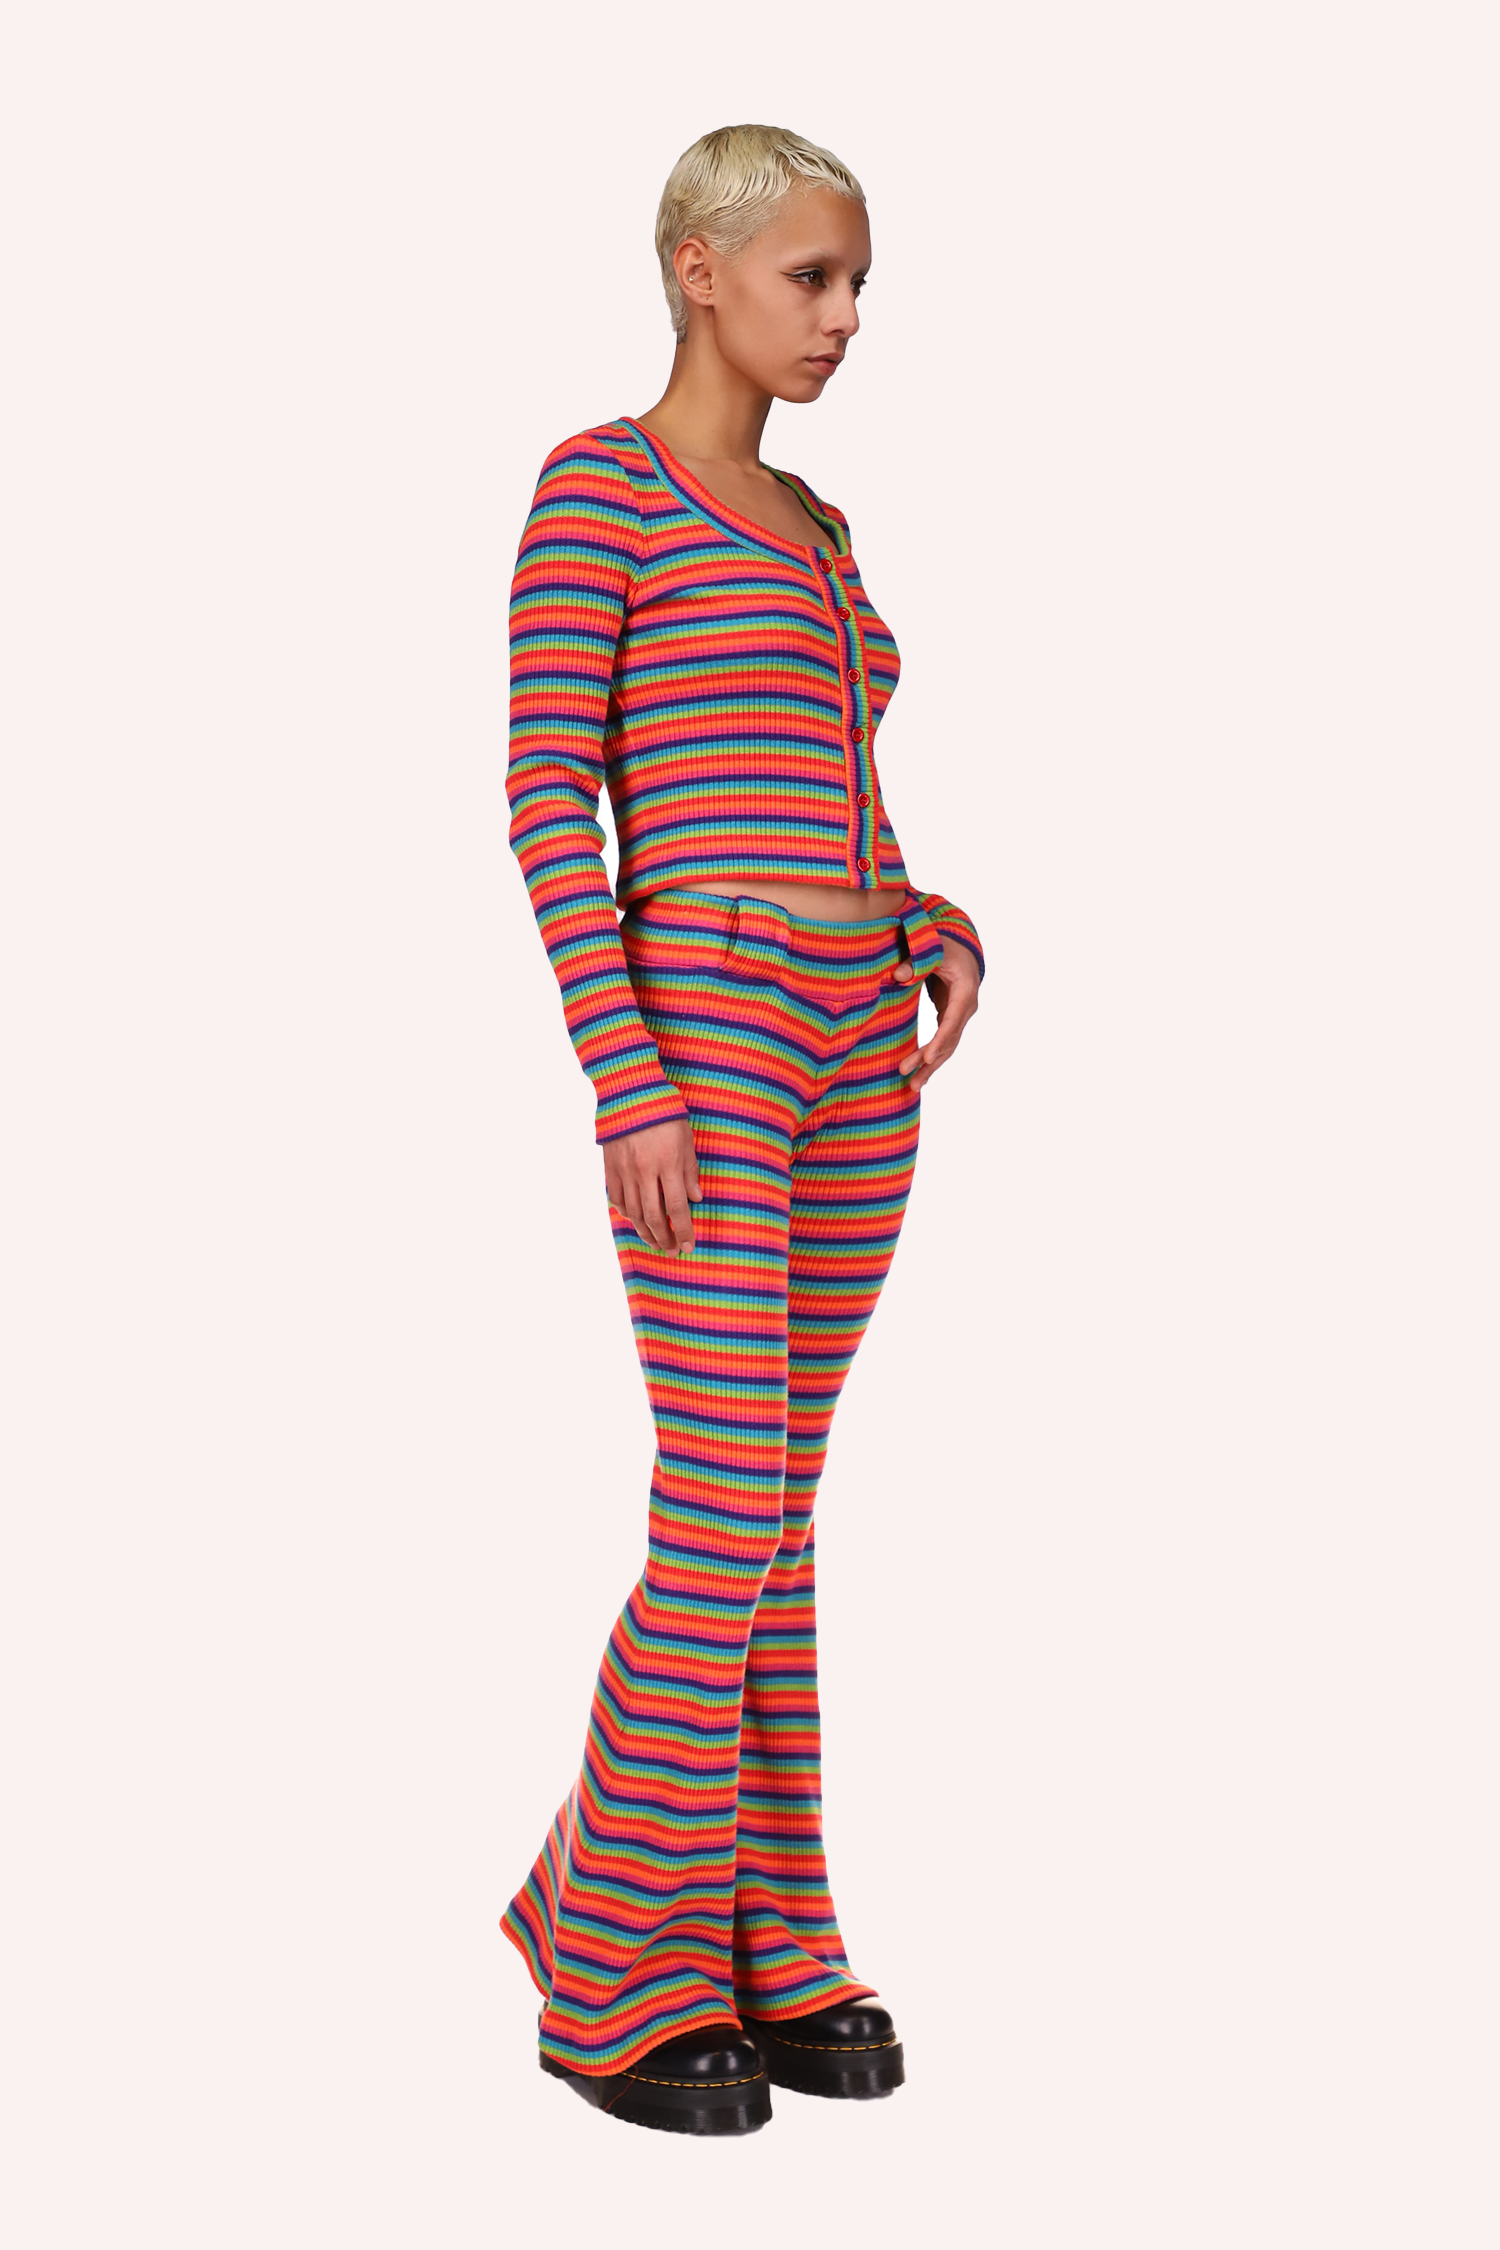 Rainbow Stripe Pants - Anna Sui